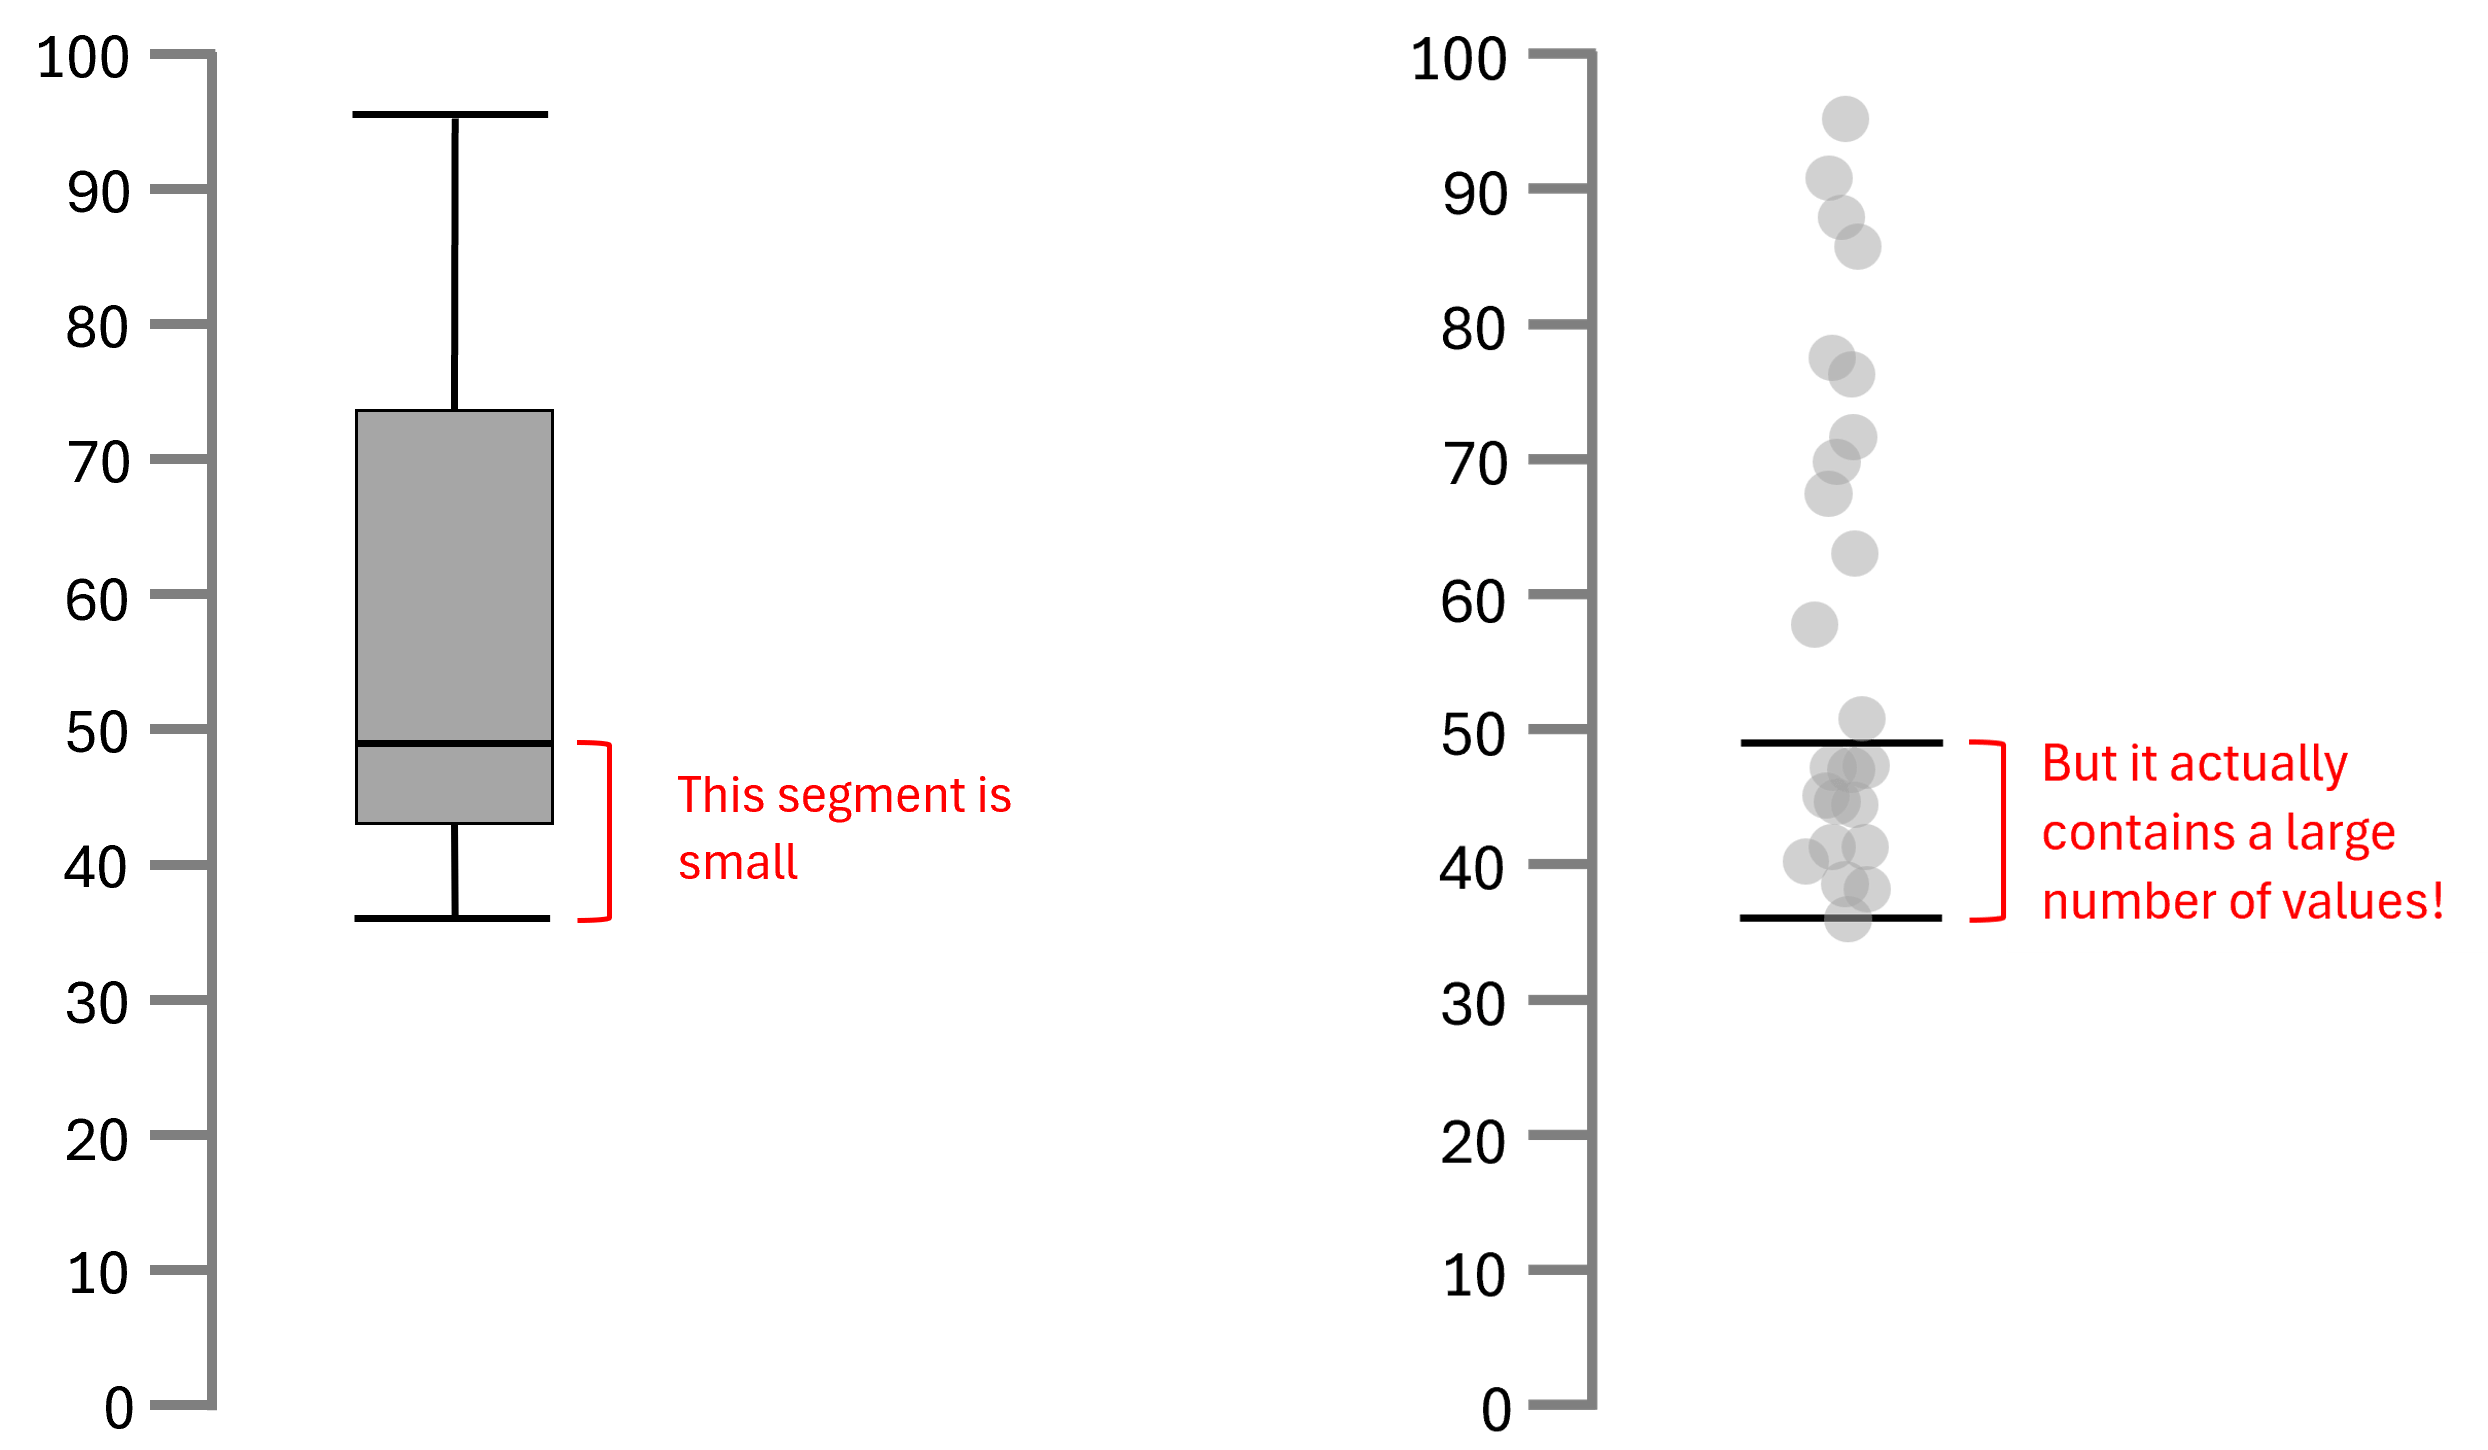 misinterpretations-boxplot-shorter-segments-represent-fewer-values